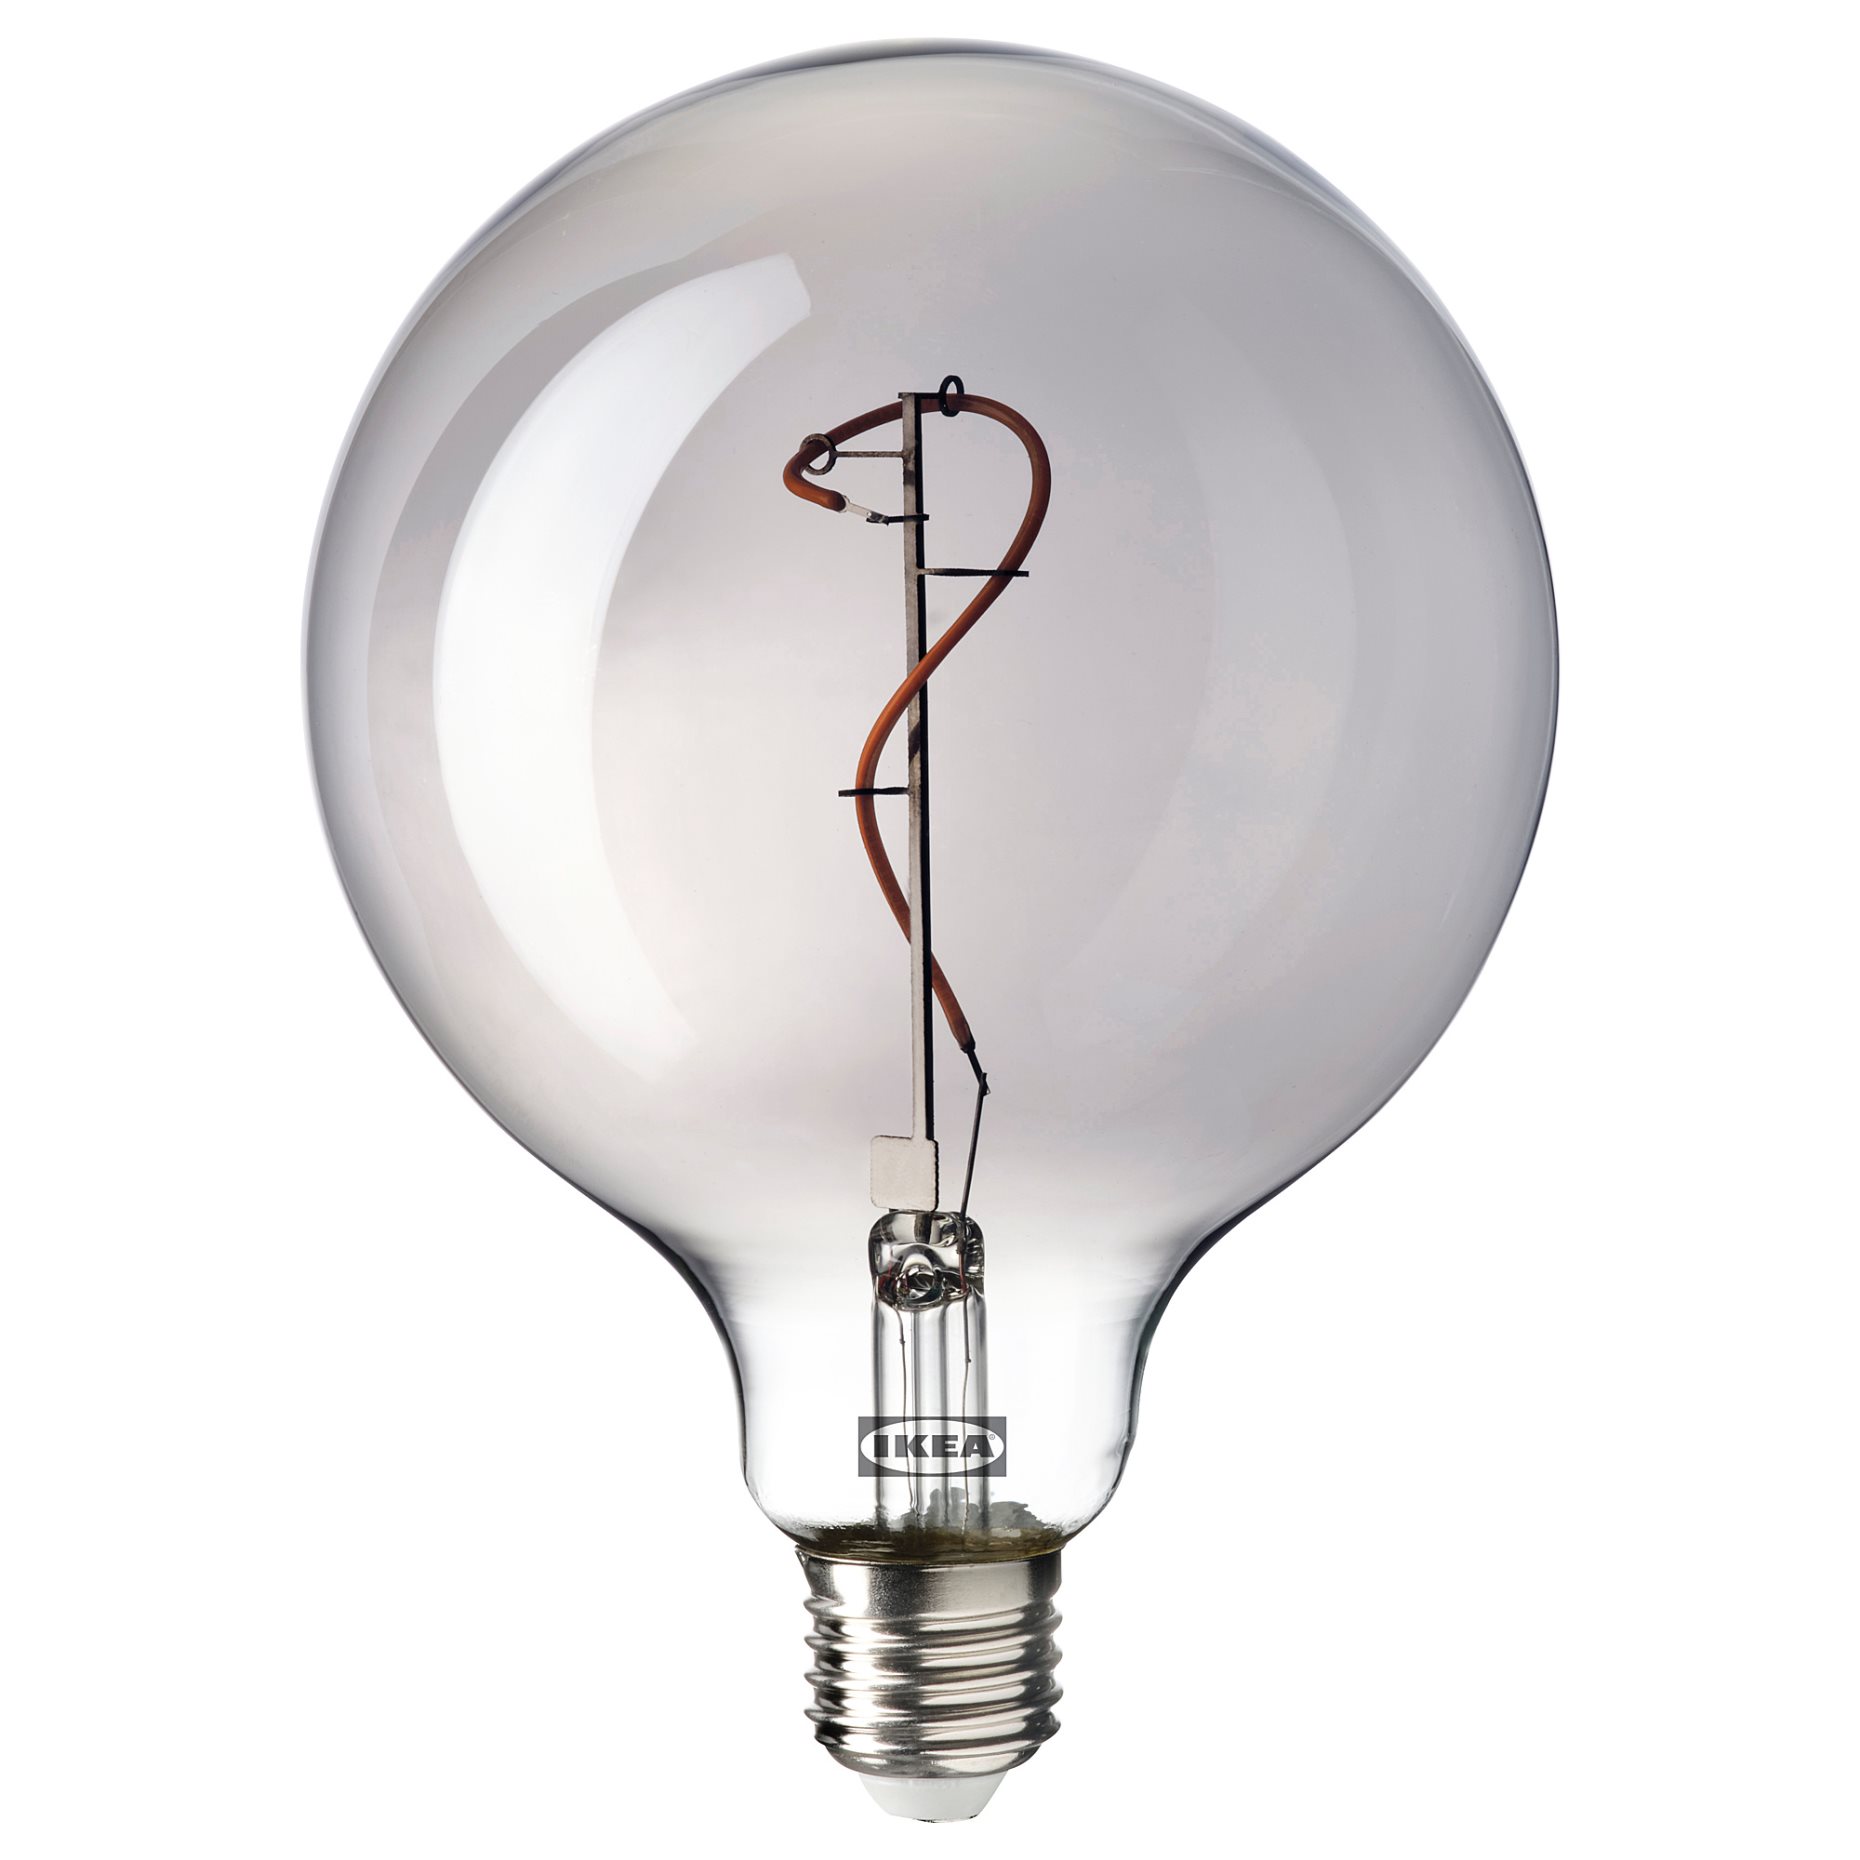 MOLNART, LED bulb E27 140 lumen/globe, 125 mm, 205.134.81